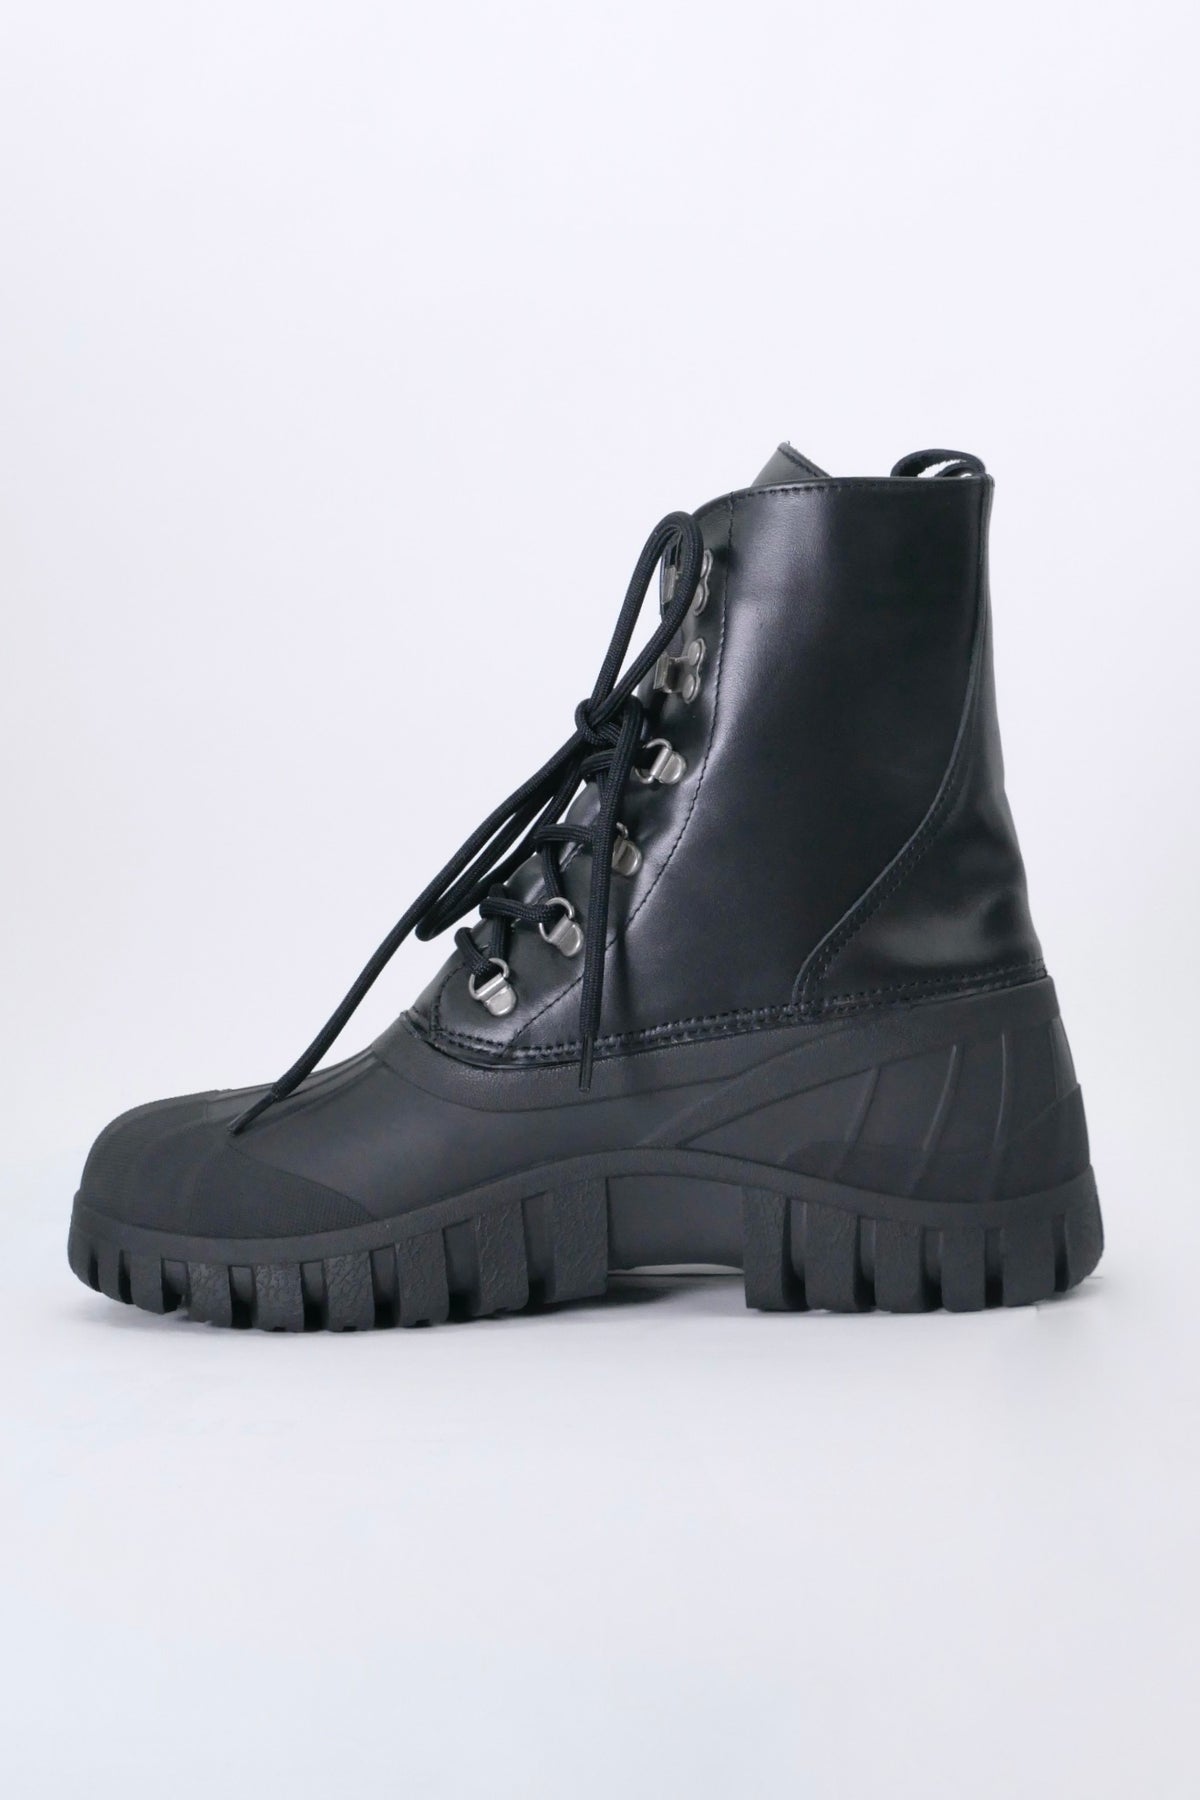 Stutterheim Leather Patrol Boot - Black